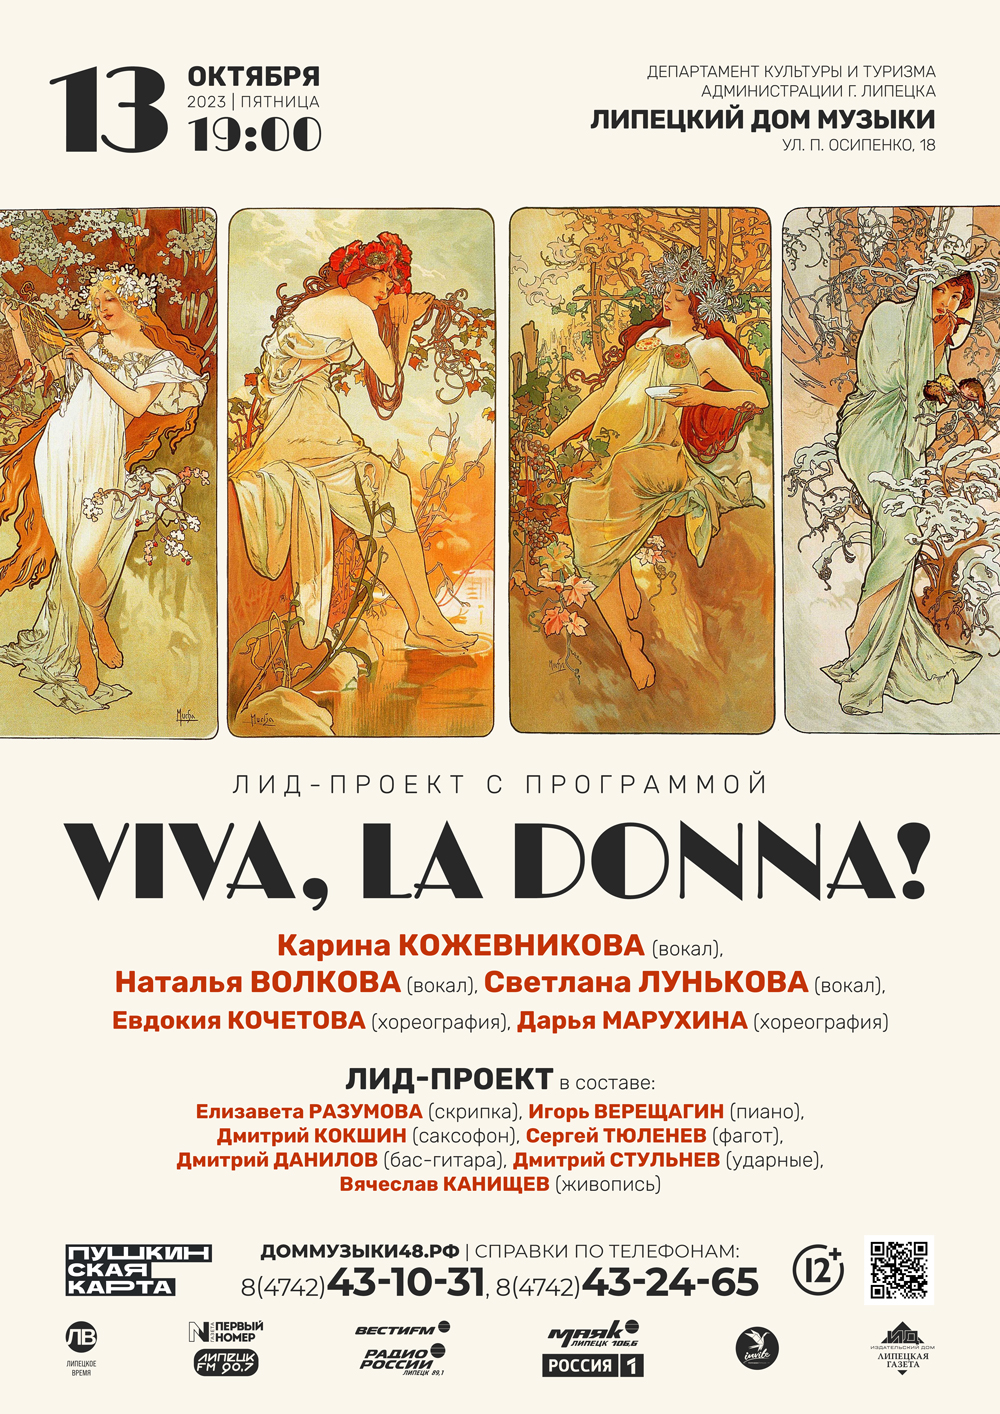 Лид проект "Viva la Donna!"